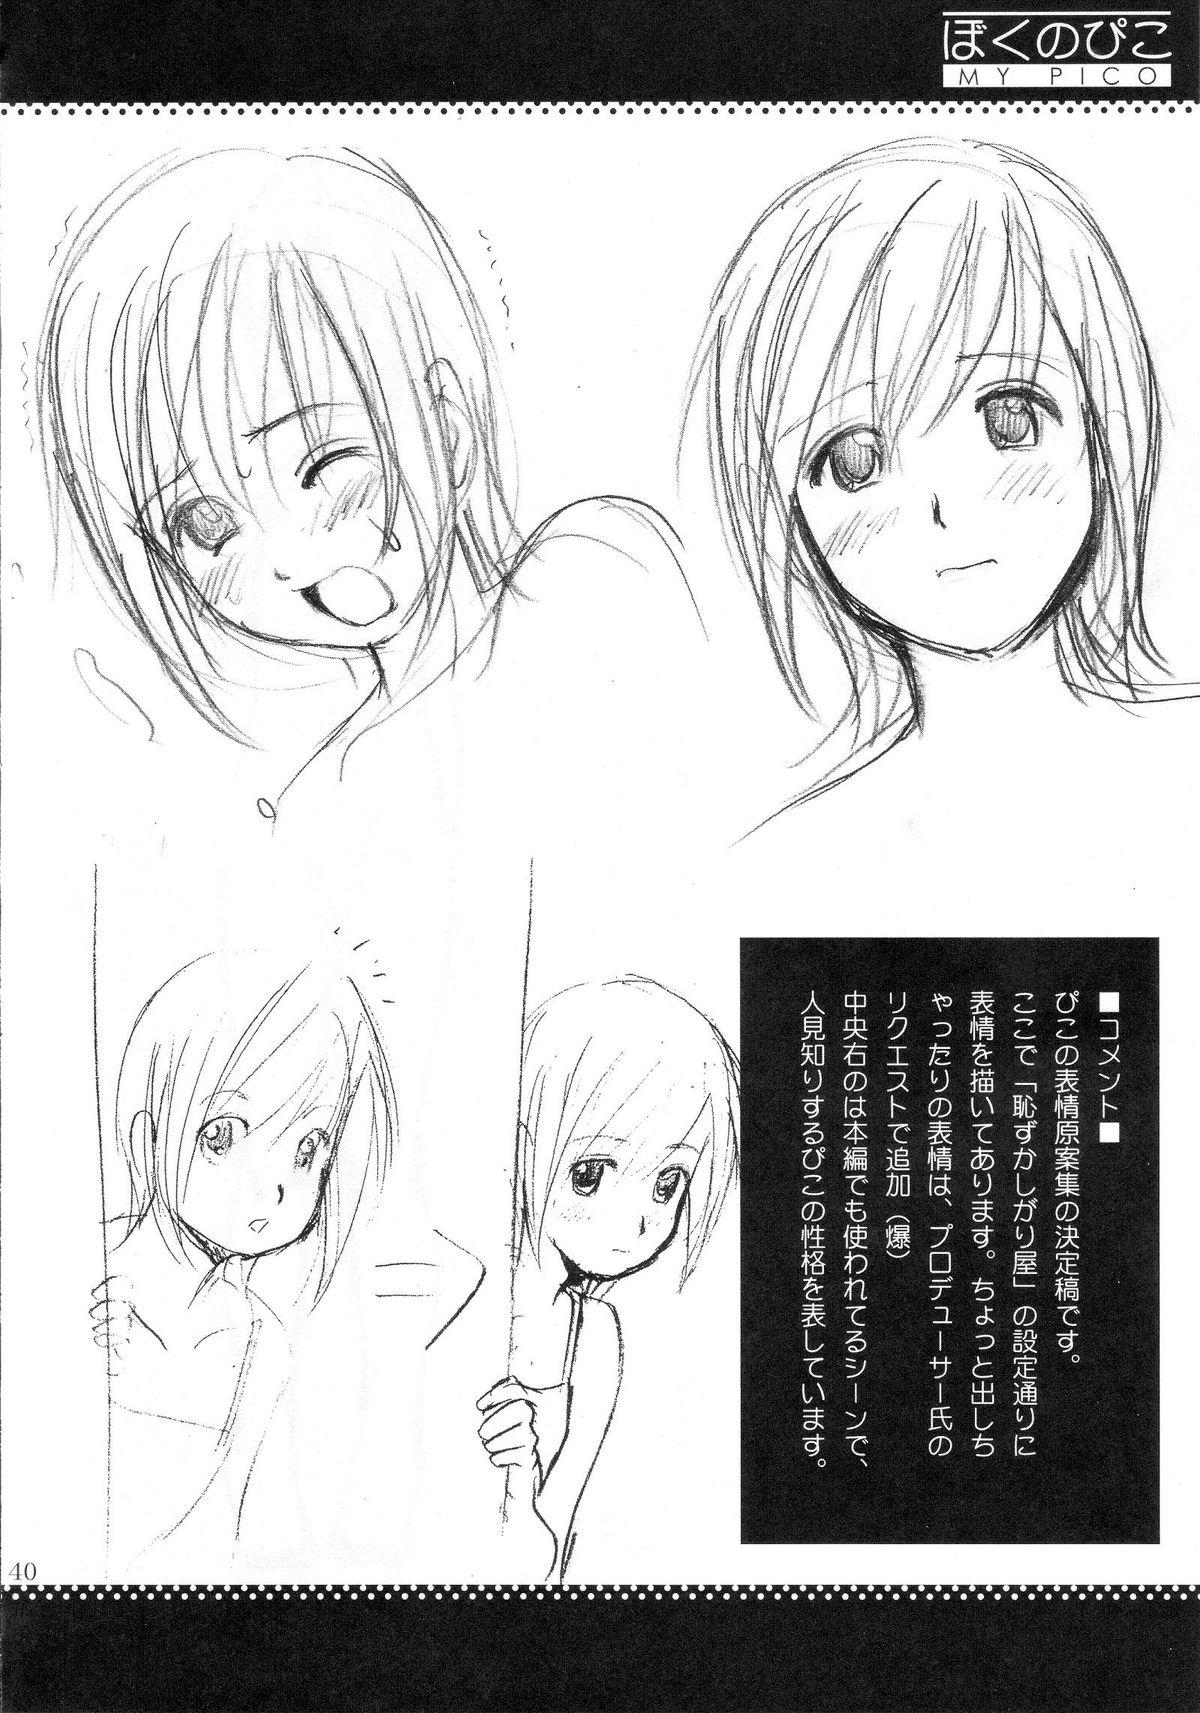 Boku no Pico Comic + Koushiki Character Genanshuu 37